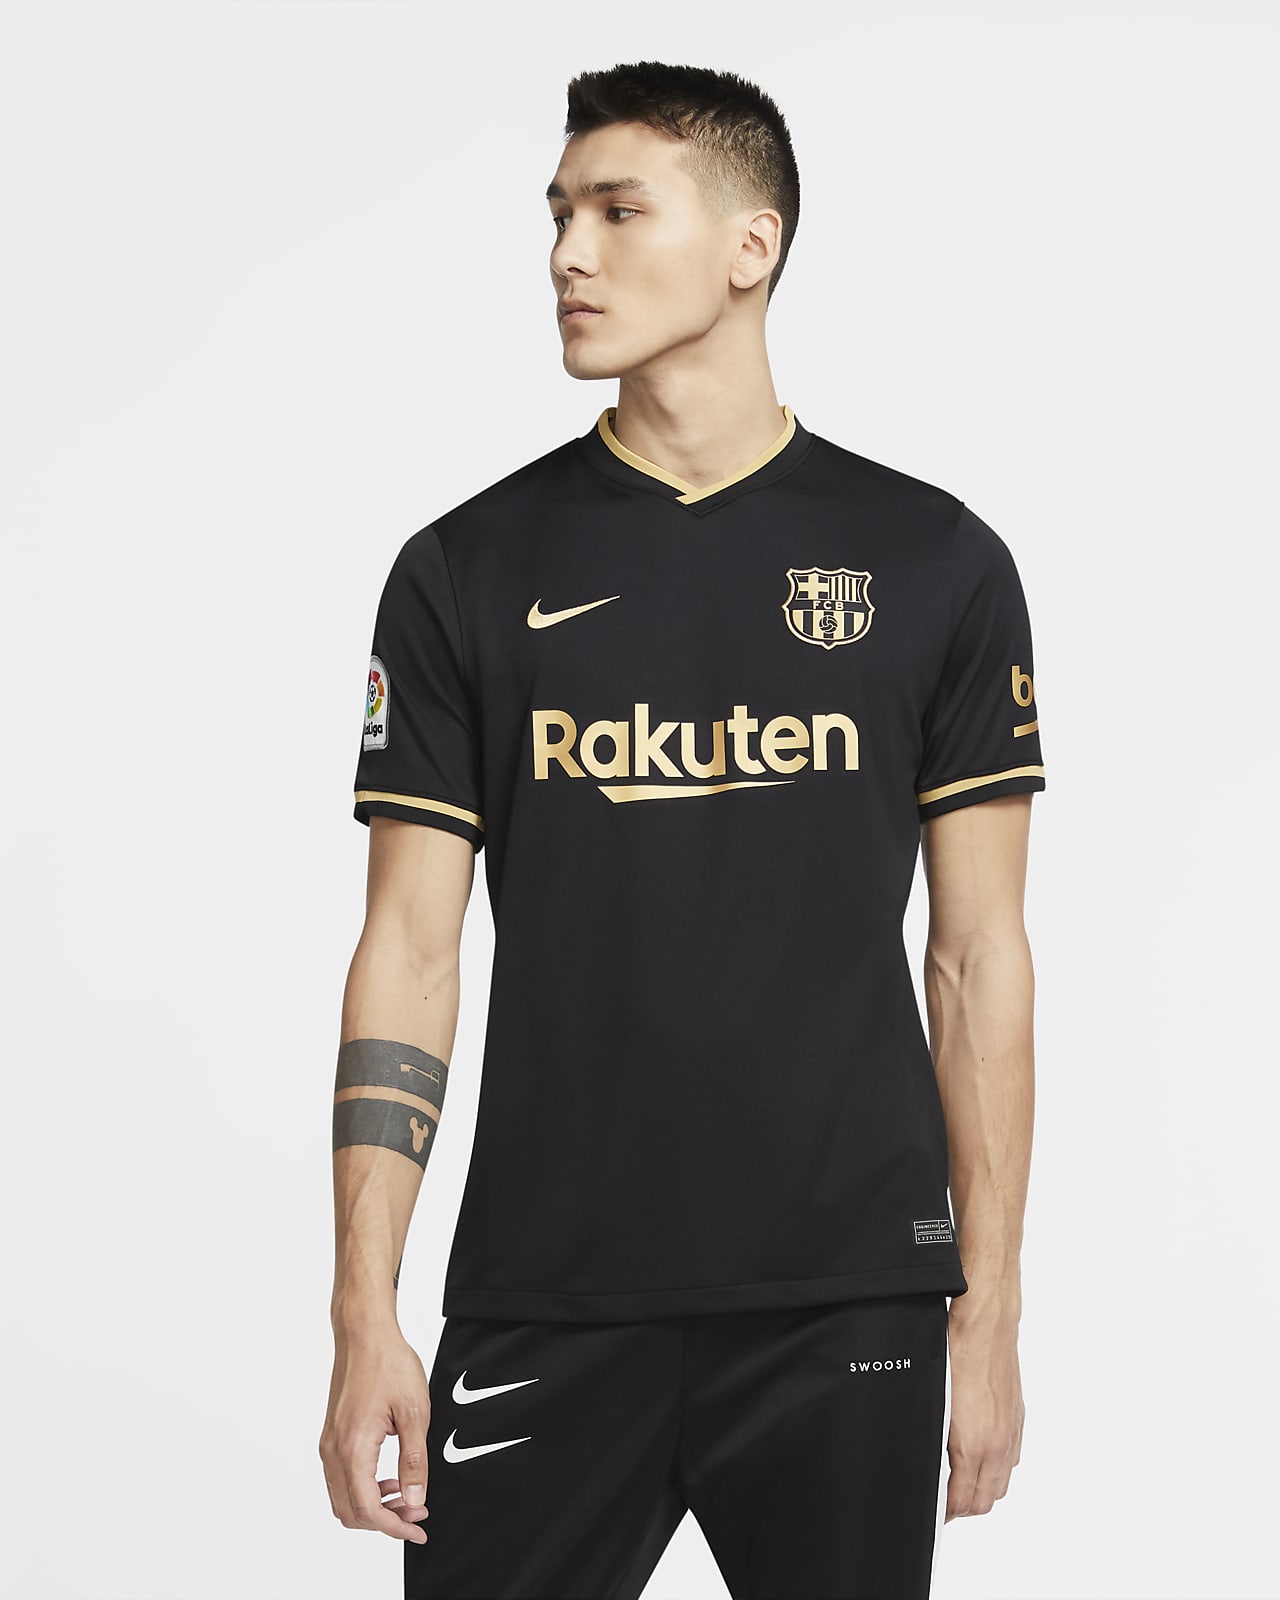 fc barcelona away kit 2020